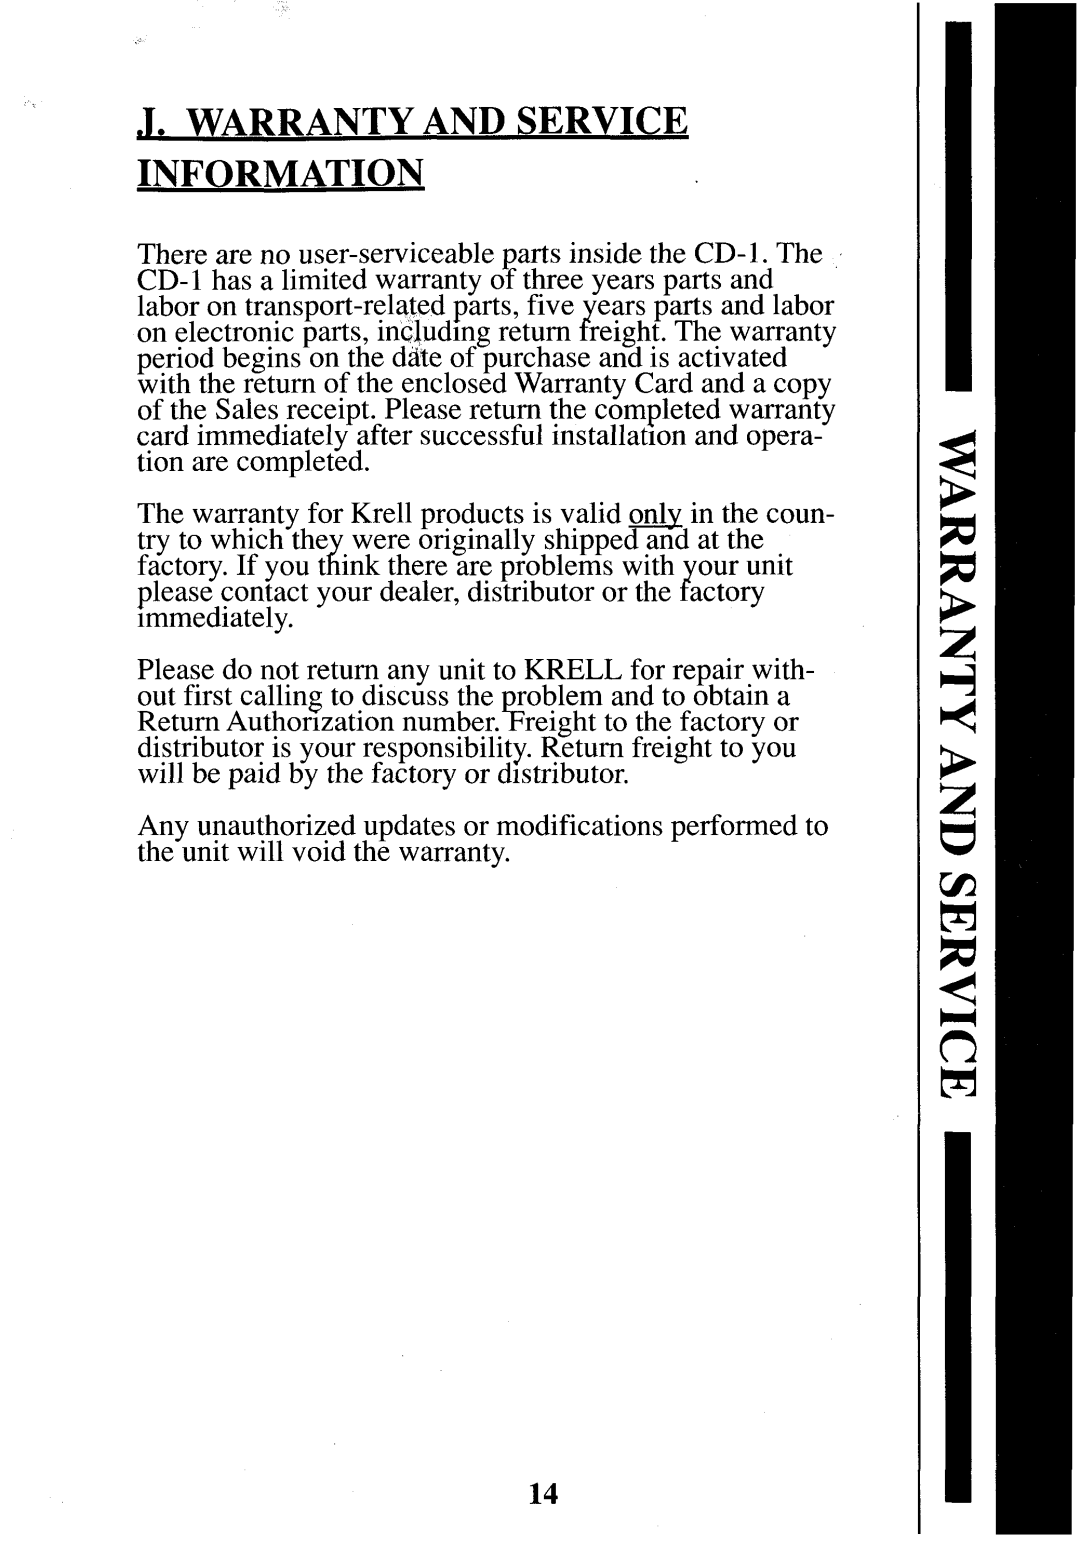 Krell Industries CD-1 manual ¯l. WARRANTYAND SERVICE INFORMATION 